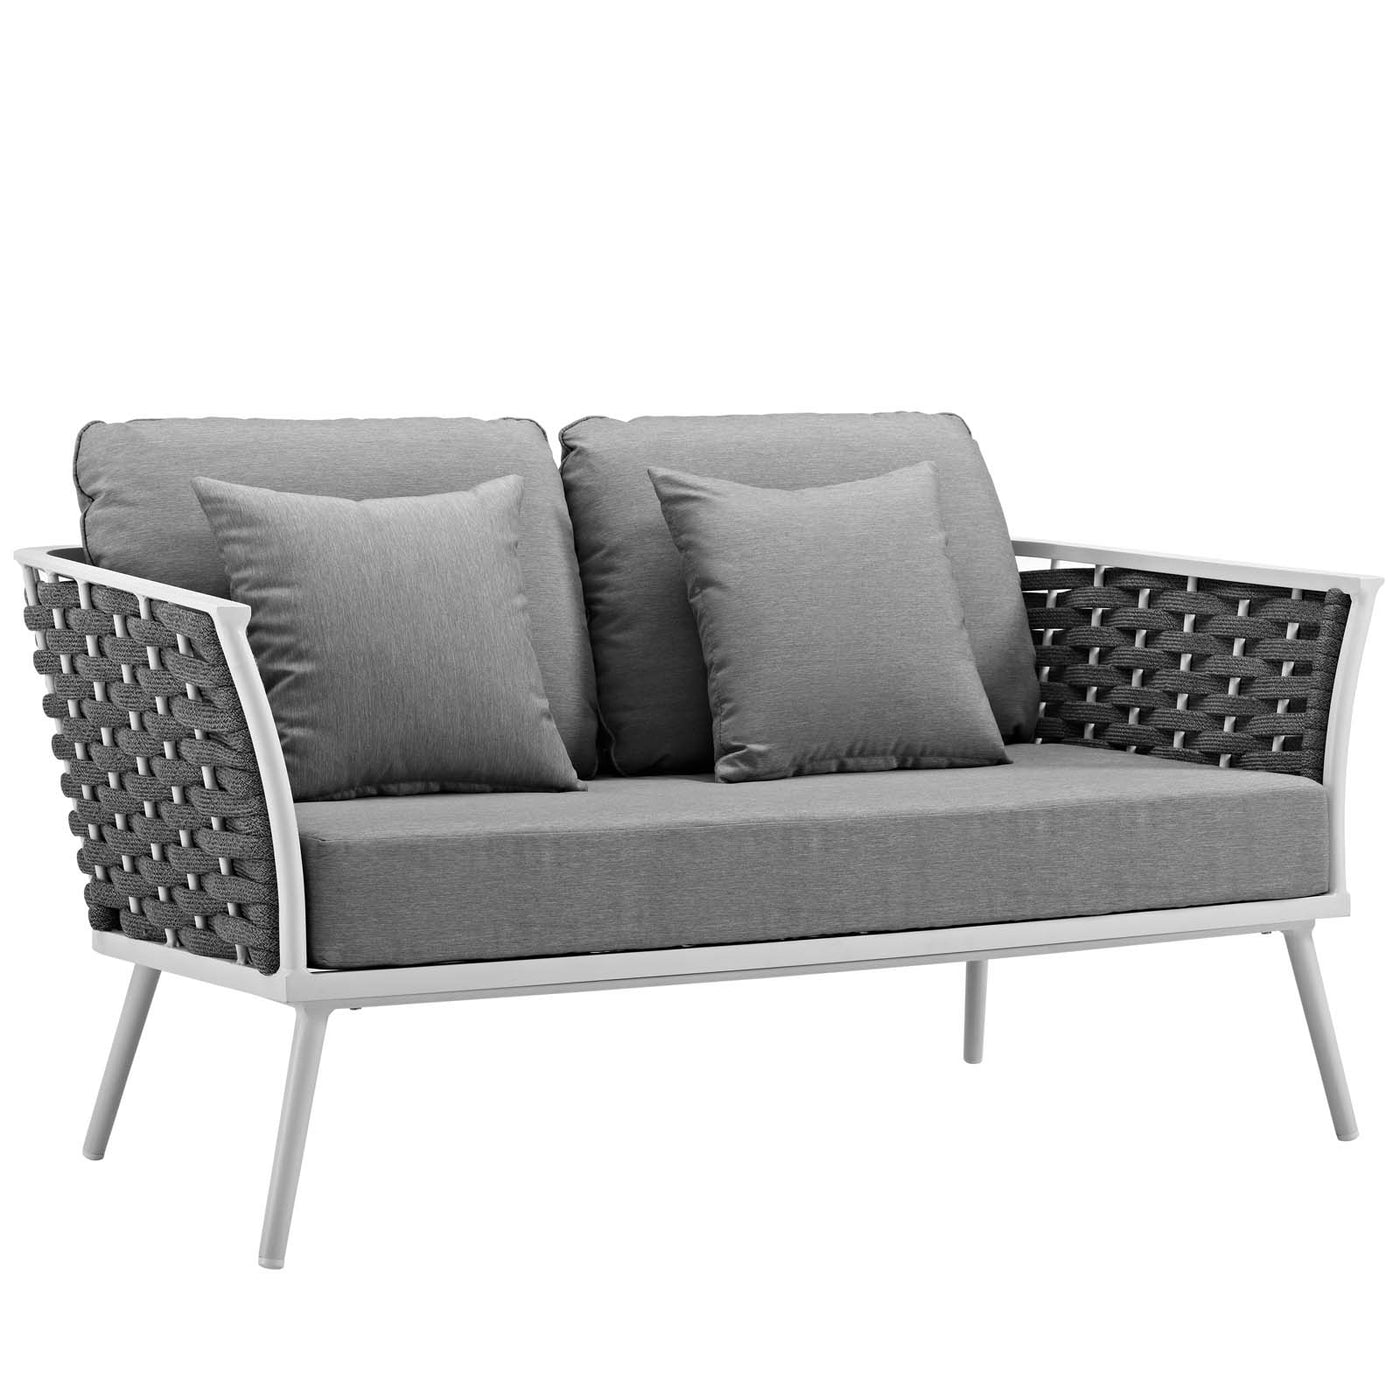 Stance 3 Piece Outdoor Patio Aluminum Sectional Sofa Set